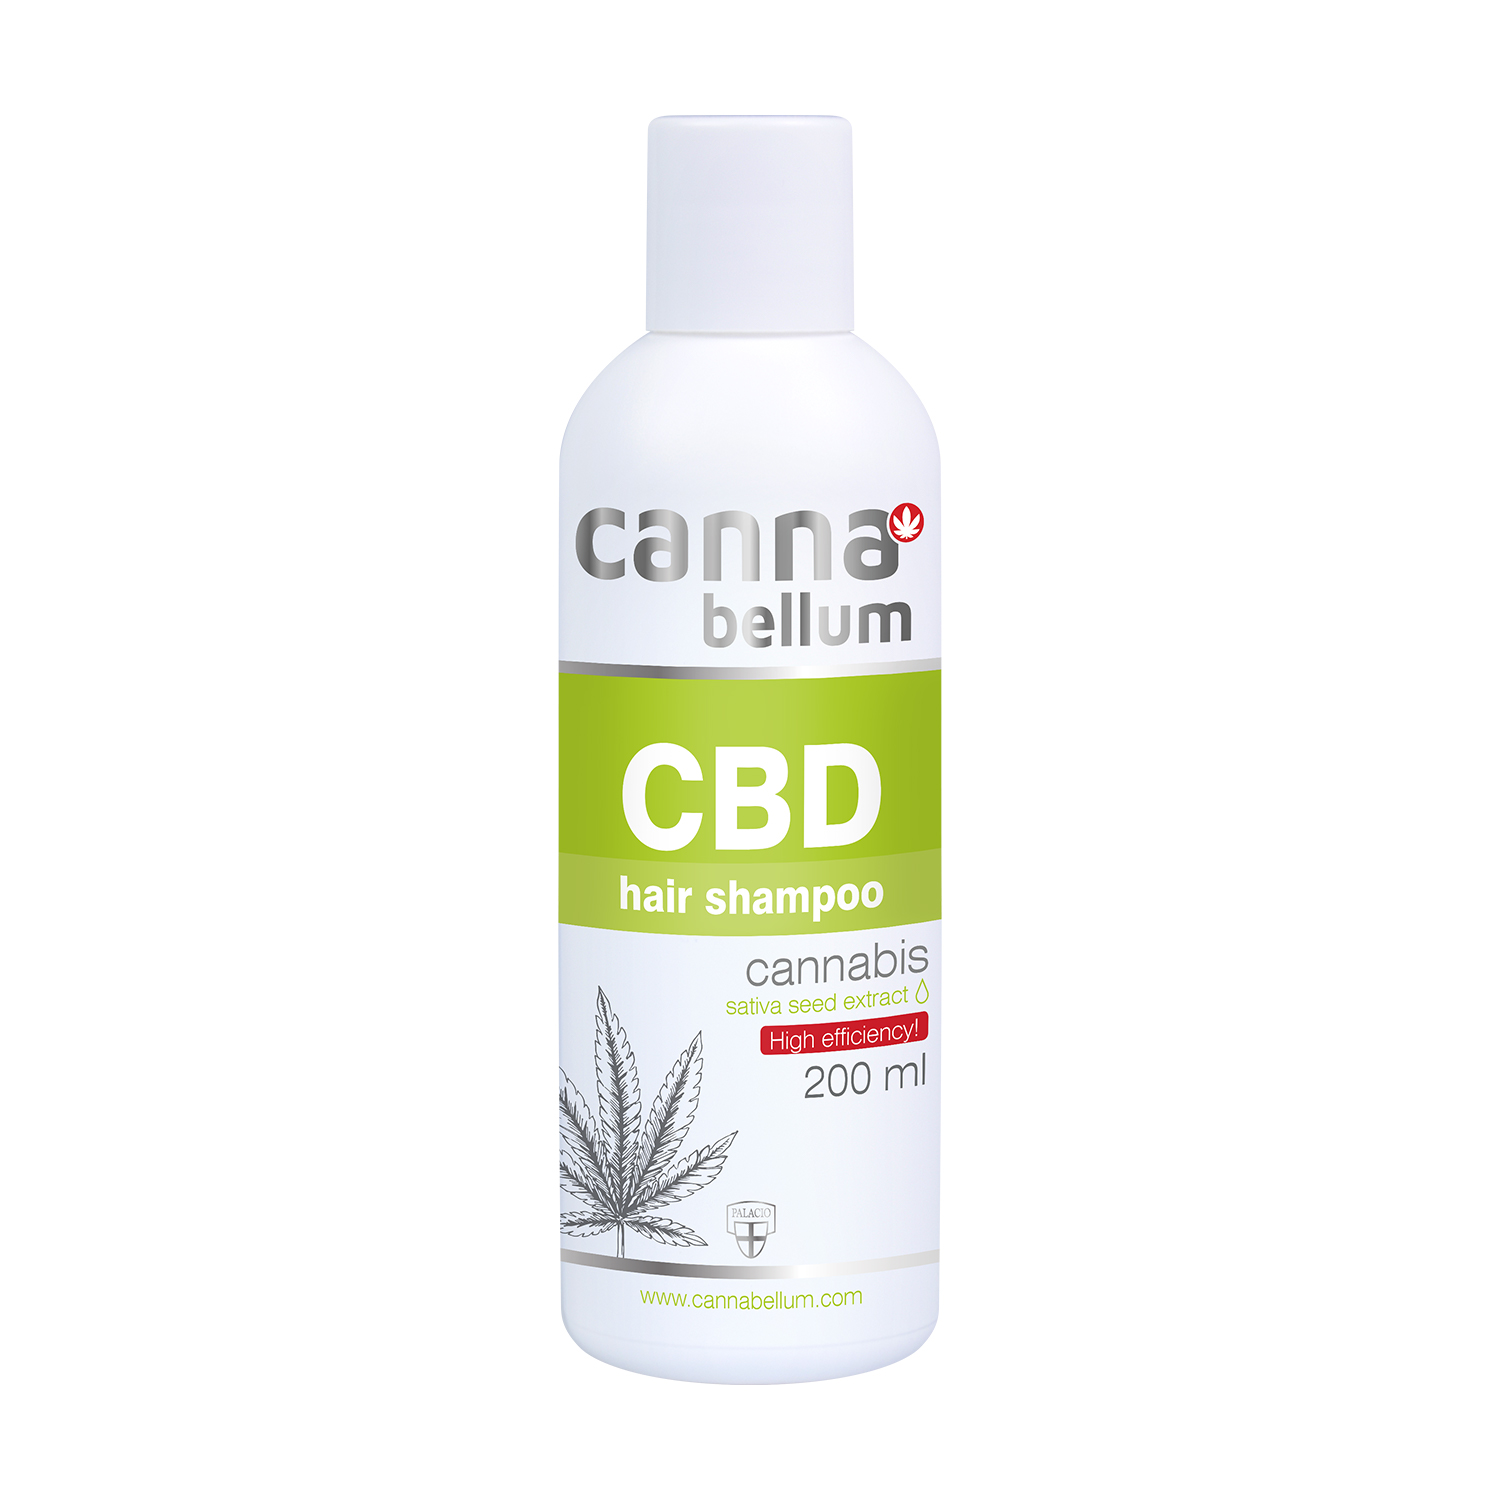 Cannabellum CBD hair shampoo 200ml P1251 WEB 401